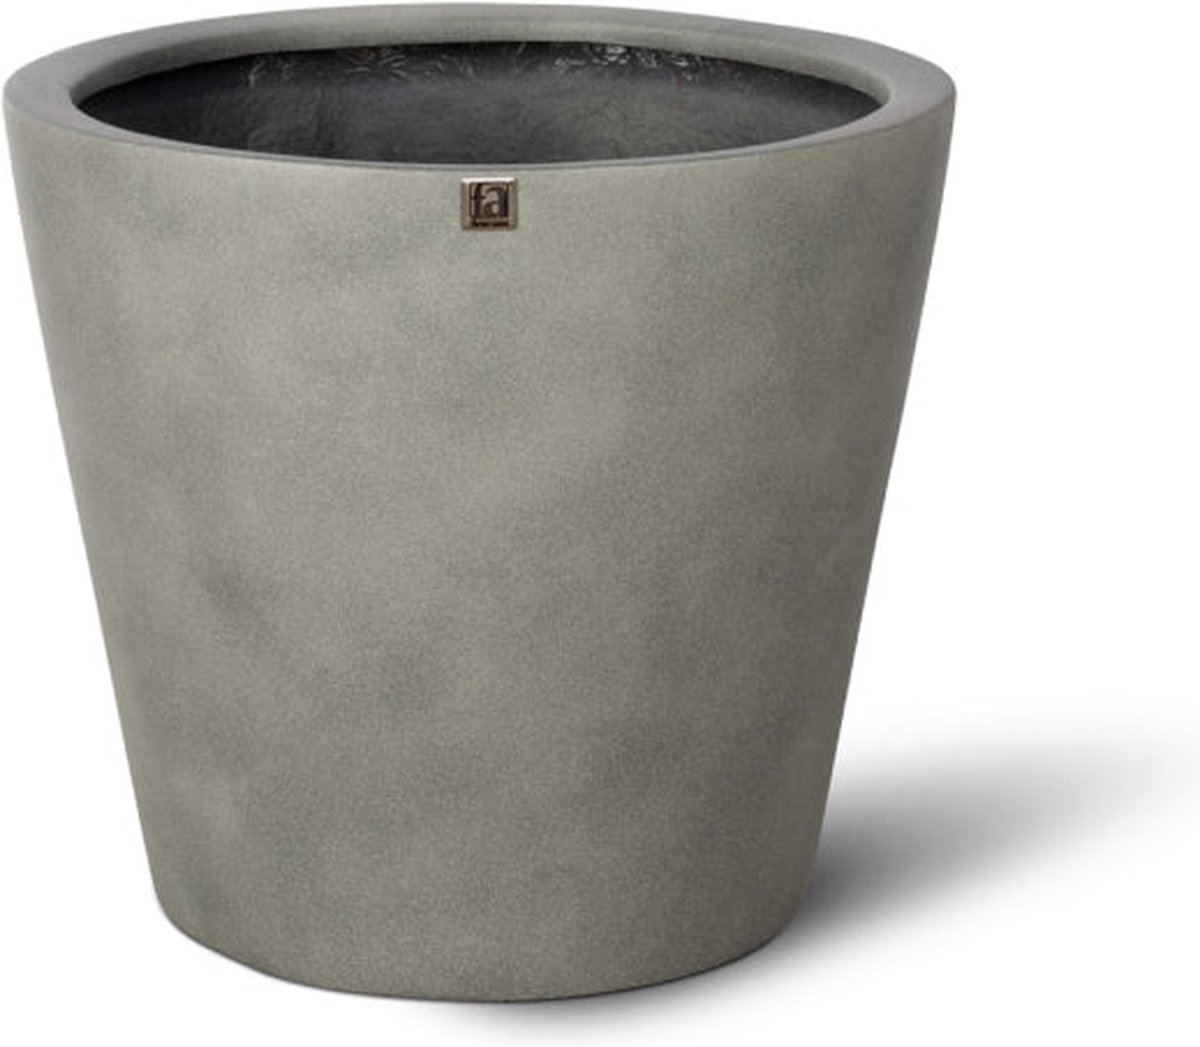 Luxe Plantenpot XL | Beton look | Bloempot | Conical Plantenbak Design | Grijs | Grote bloembak | 40 x 35 cm